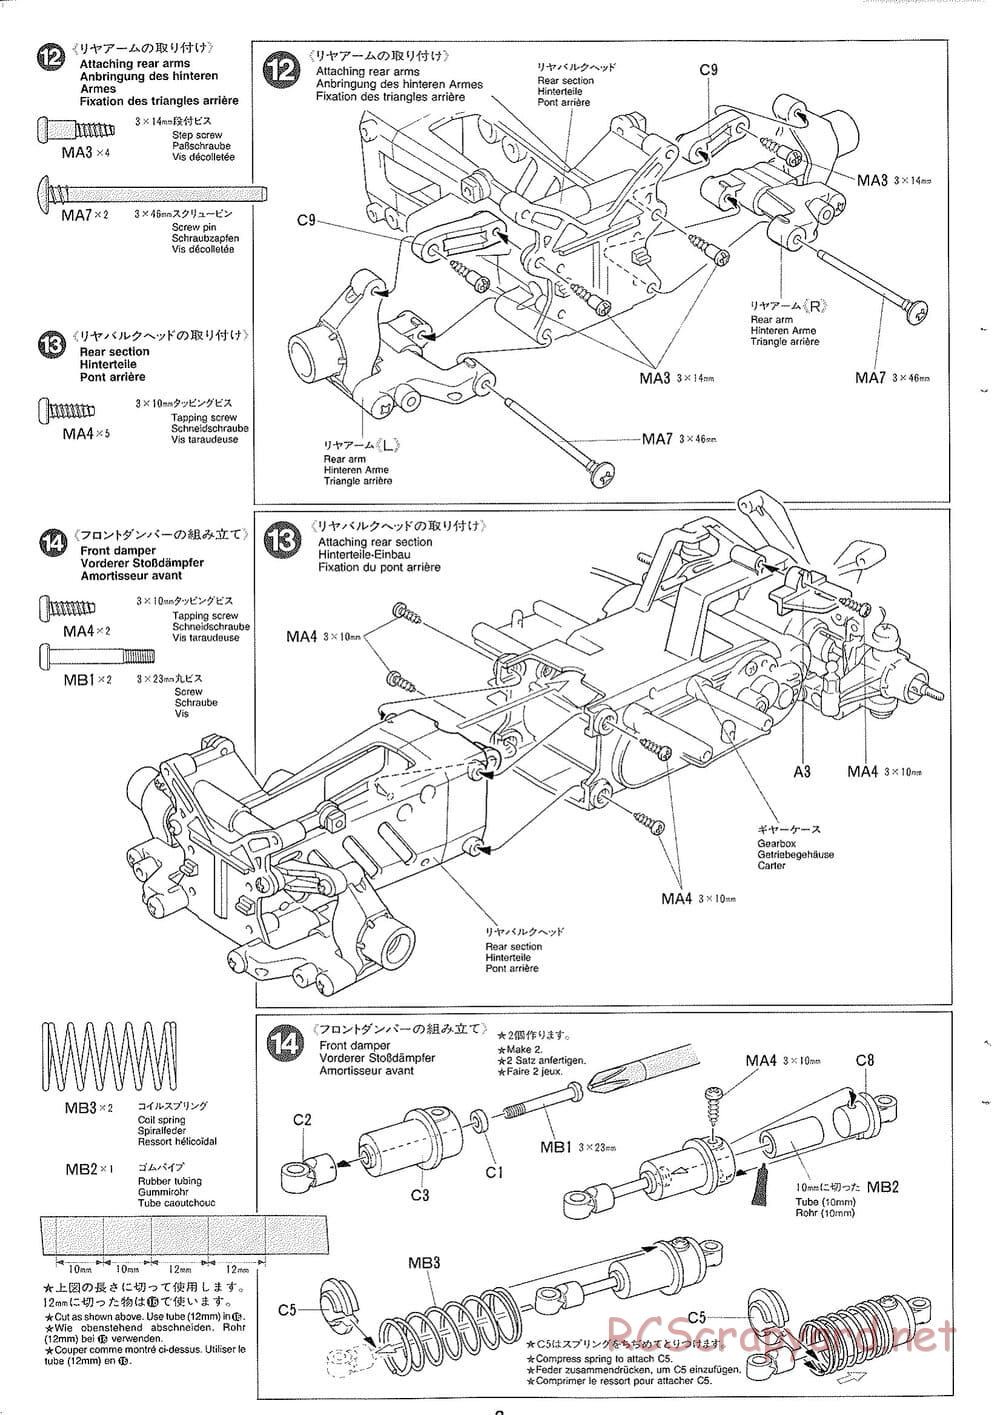 Tamiya - Rover Mini Cooper Racing - M03 Chassis - Manual - Page 8